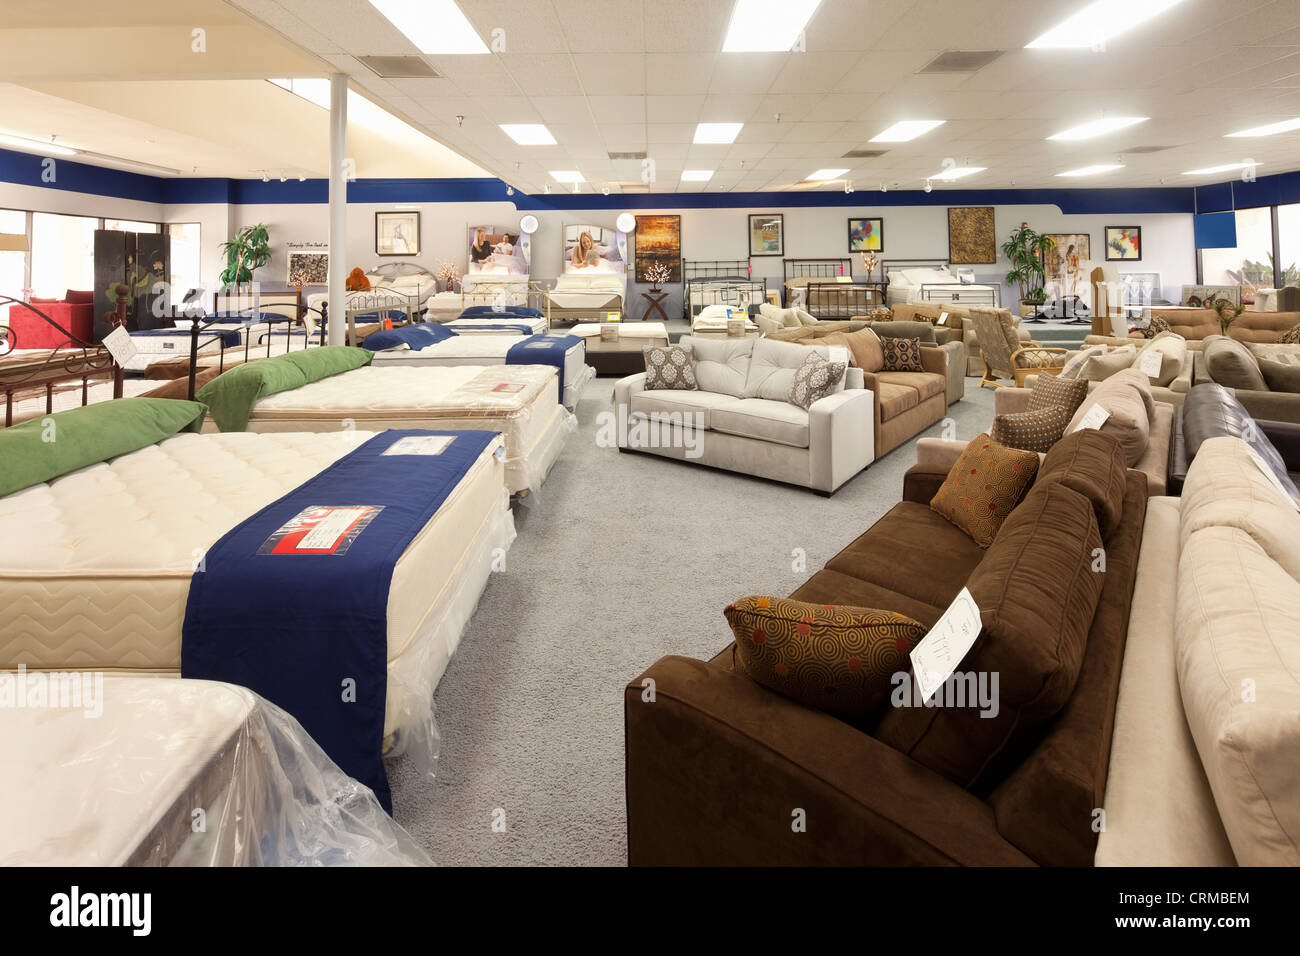 Interior of furniture store Stock Photo - Alamy